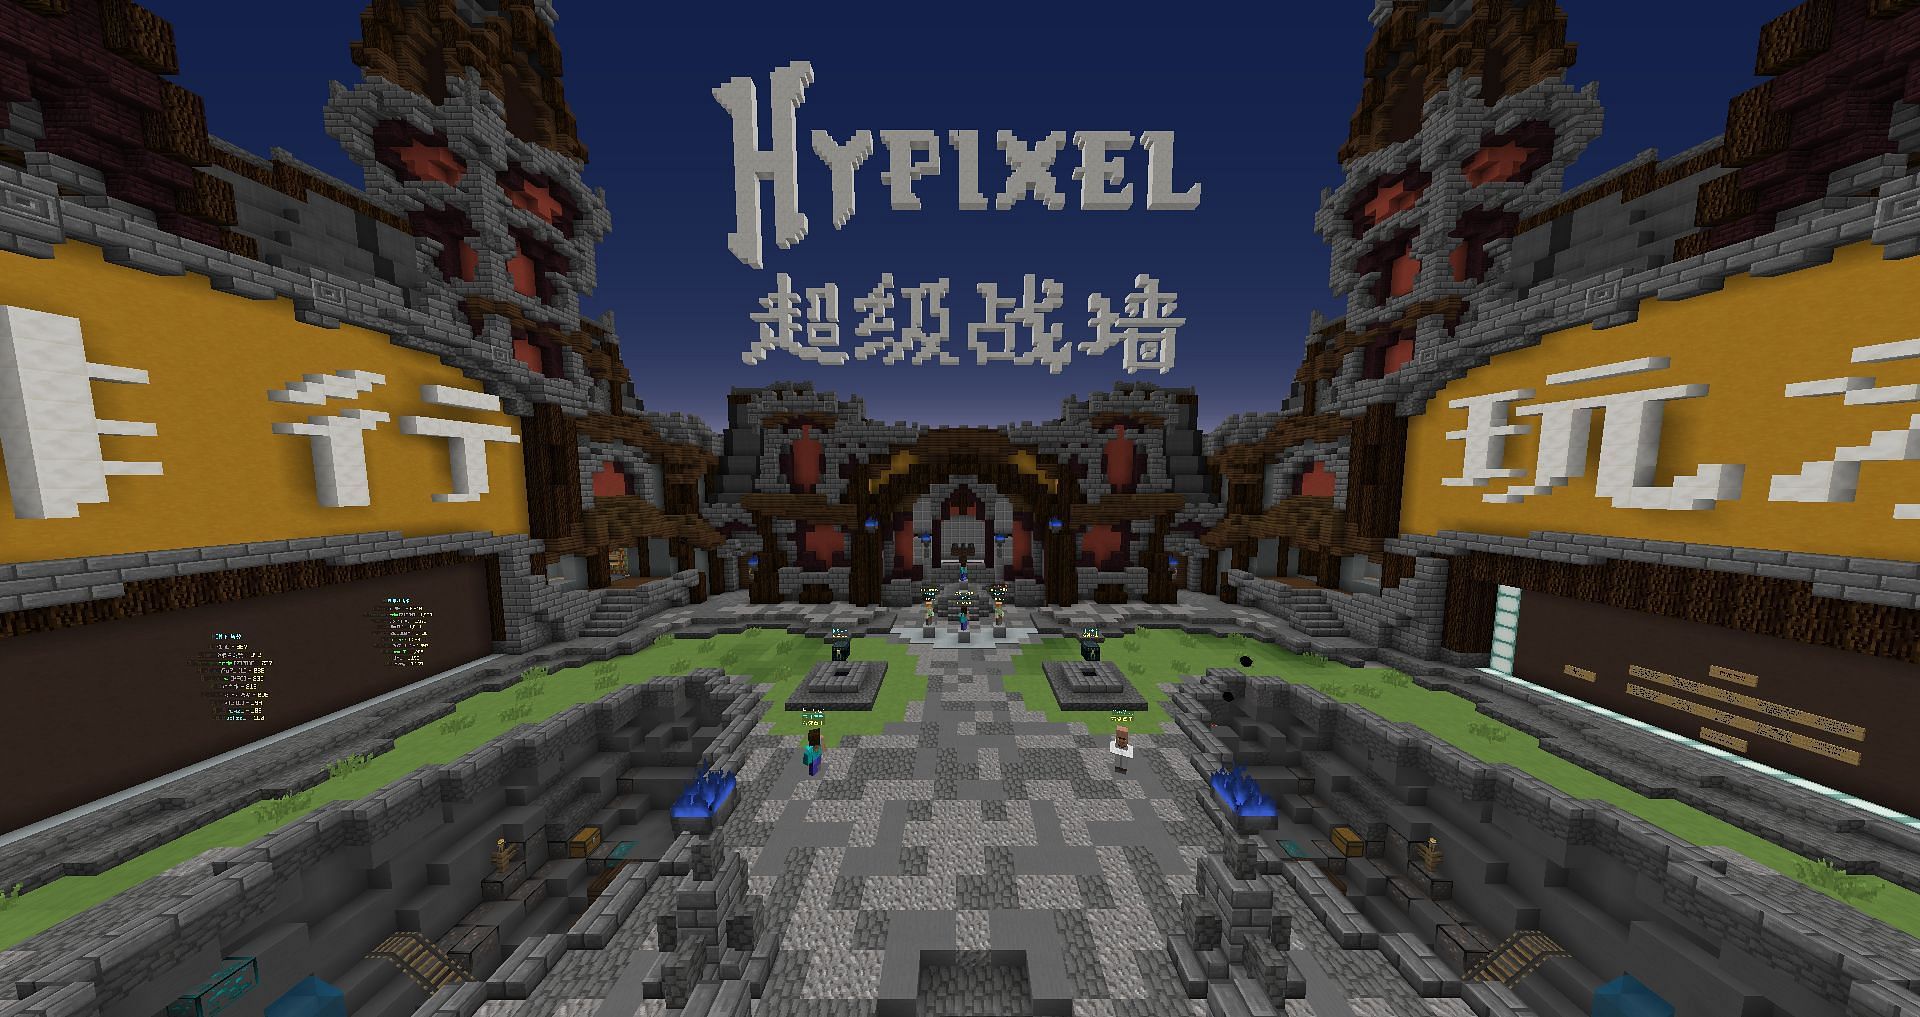 Hypixel wiki